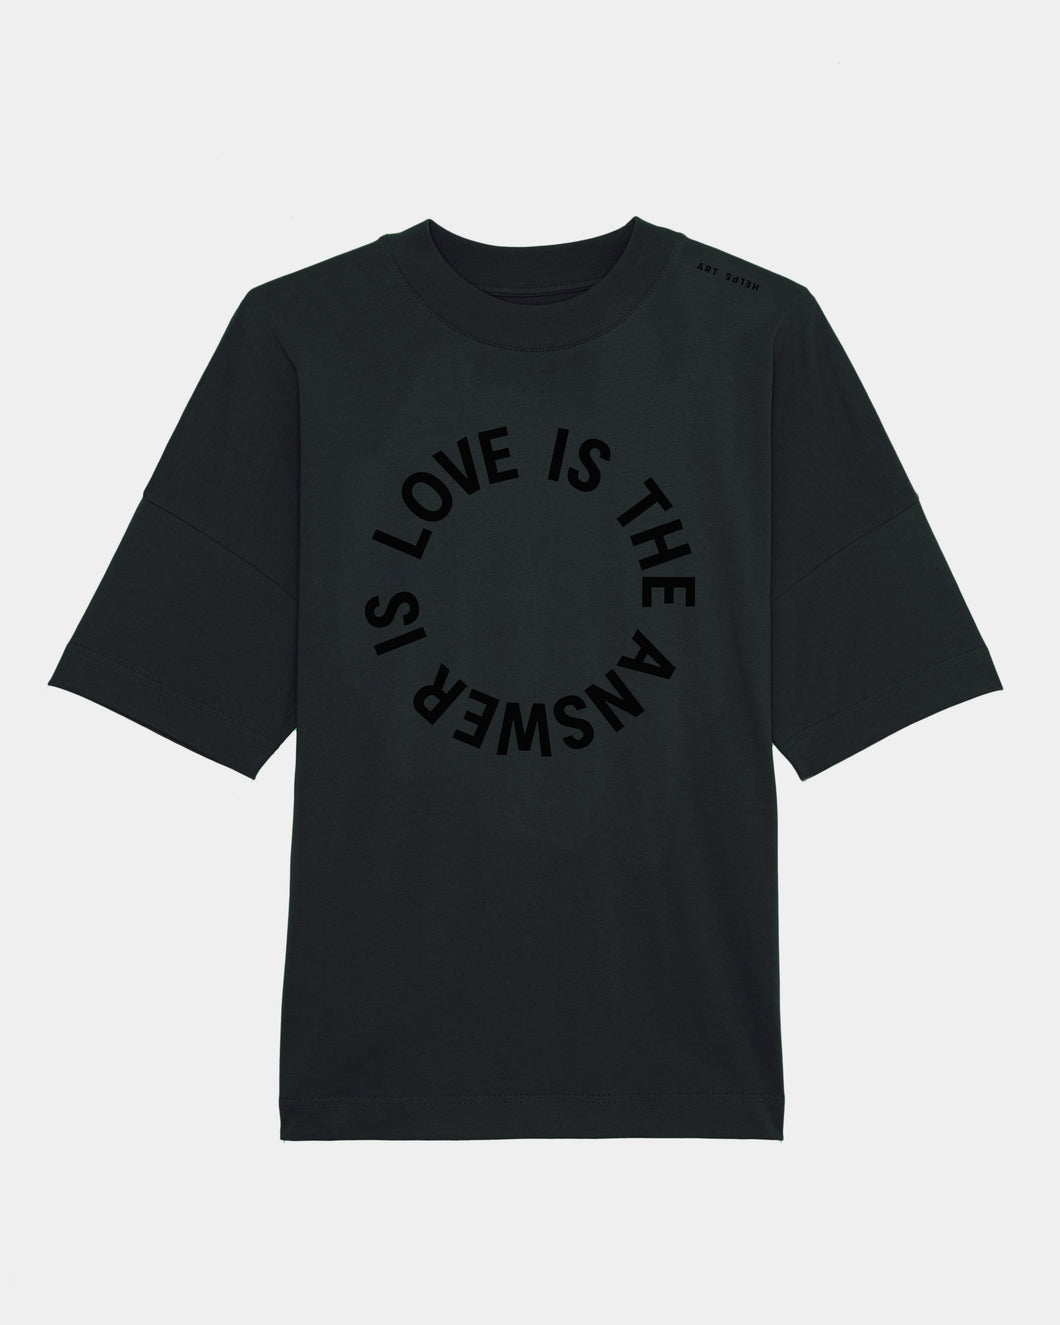 LOVE T-Shirt